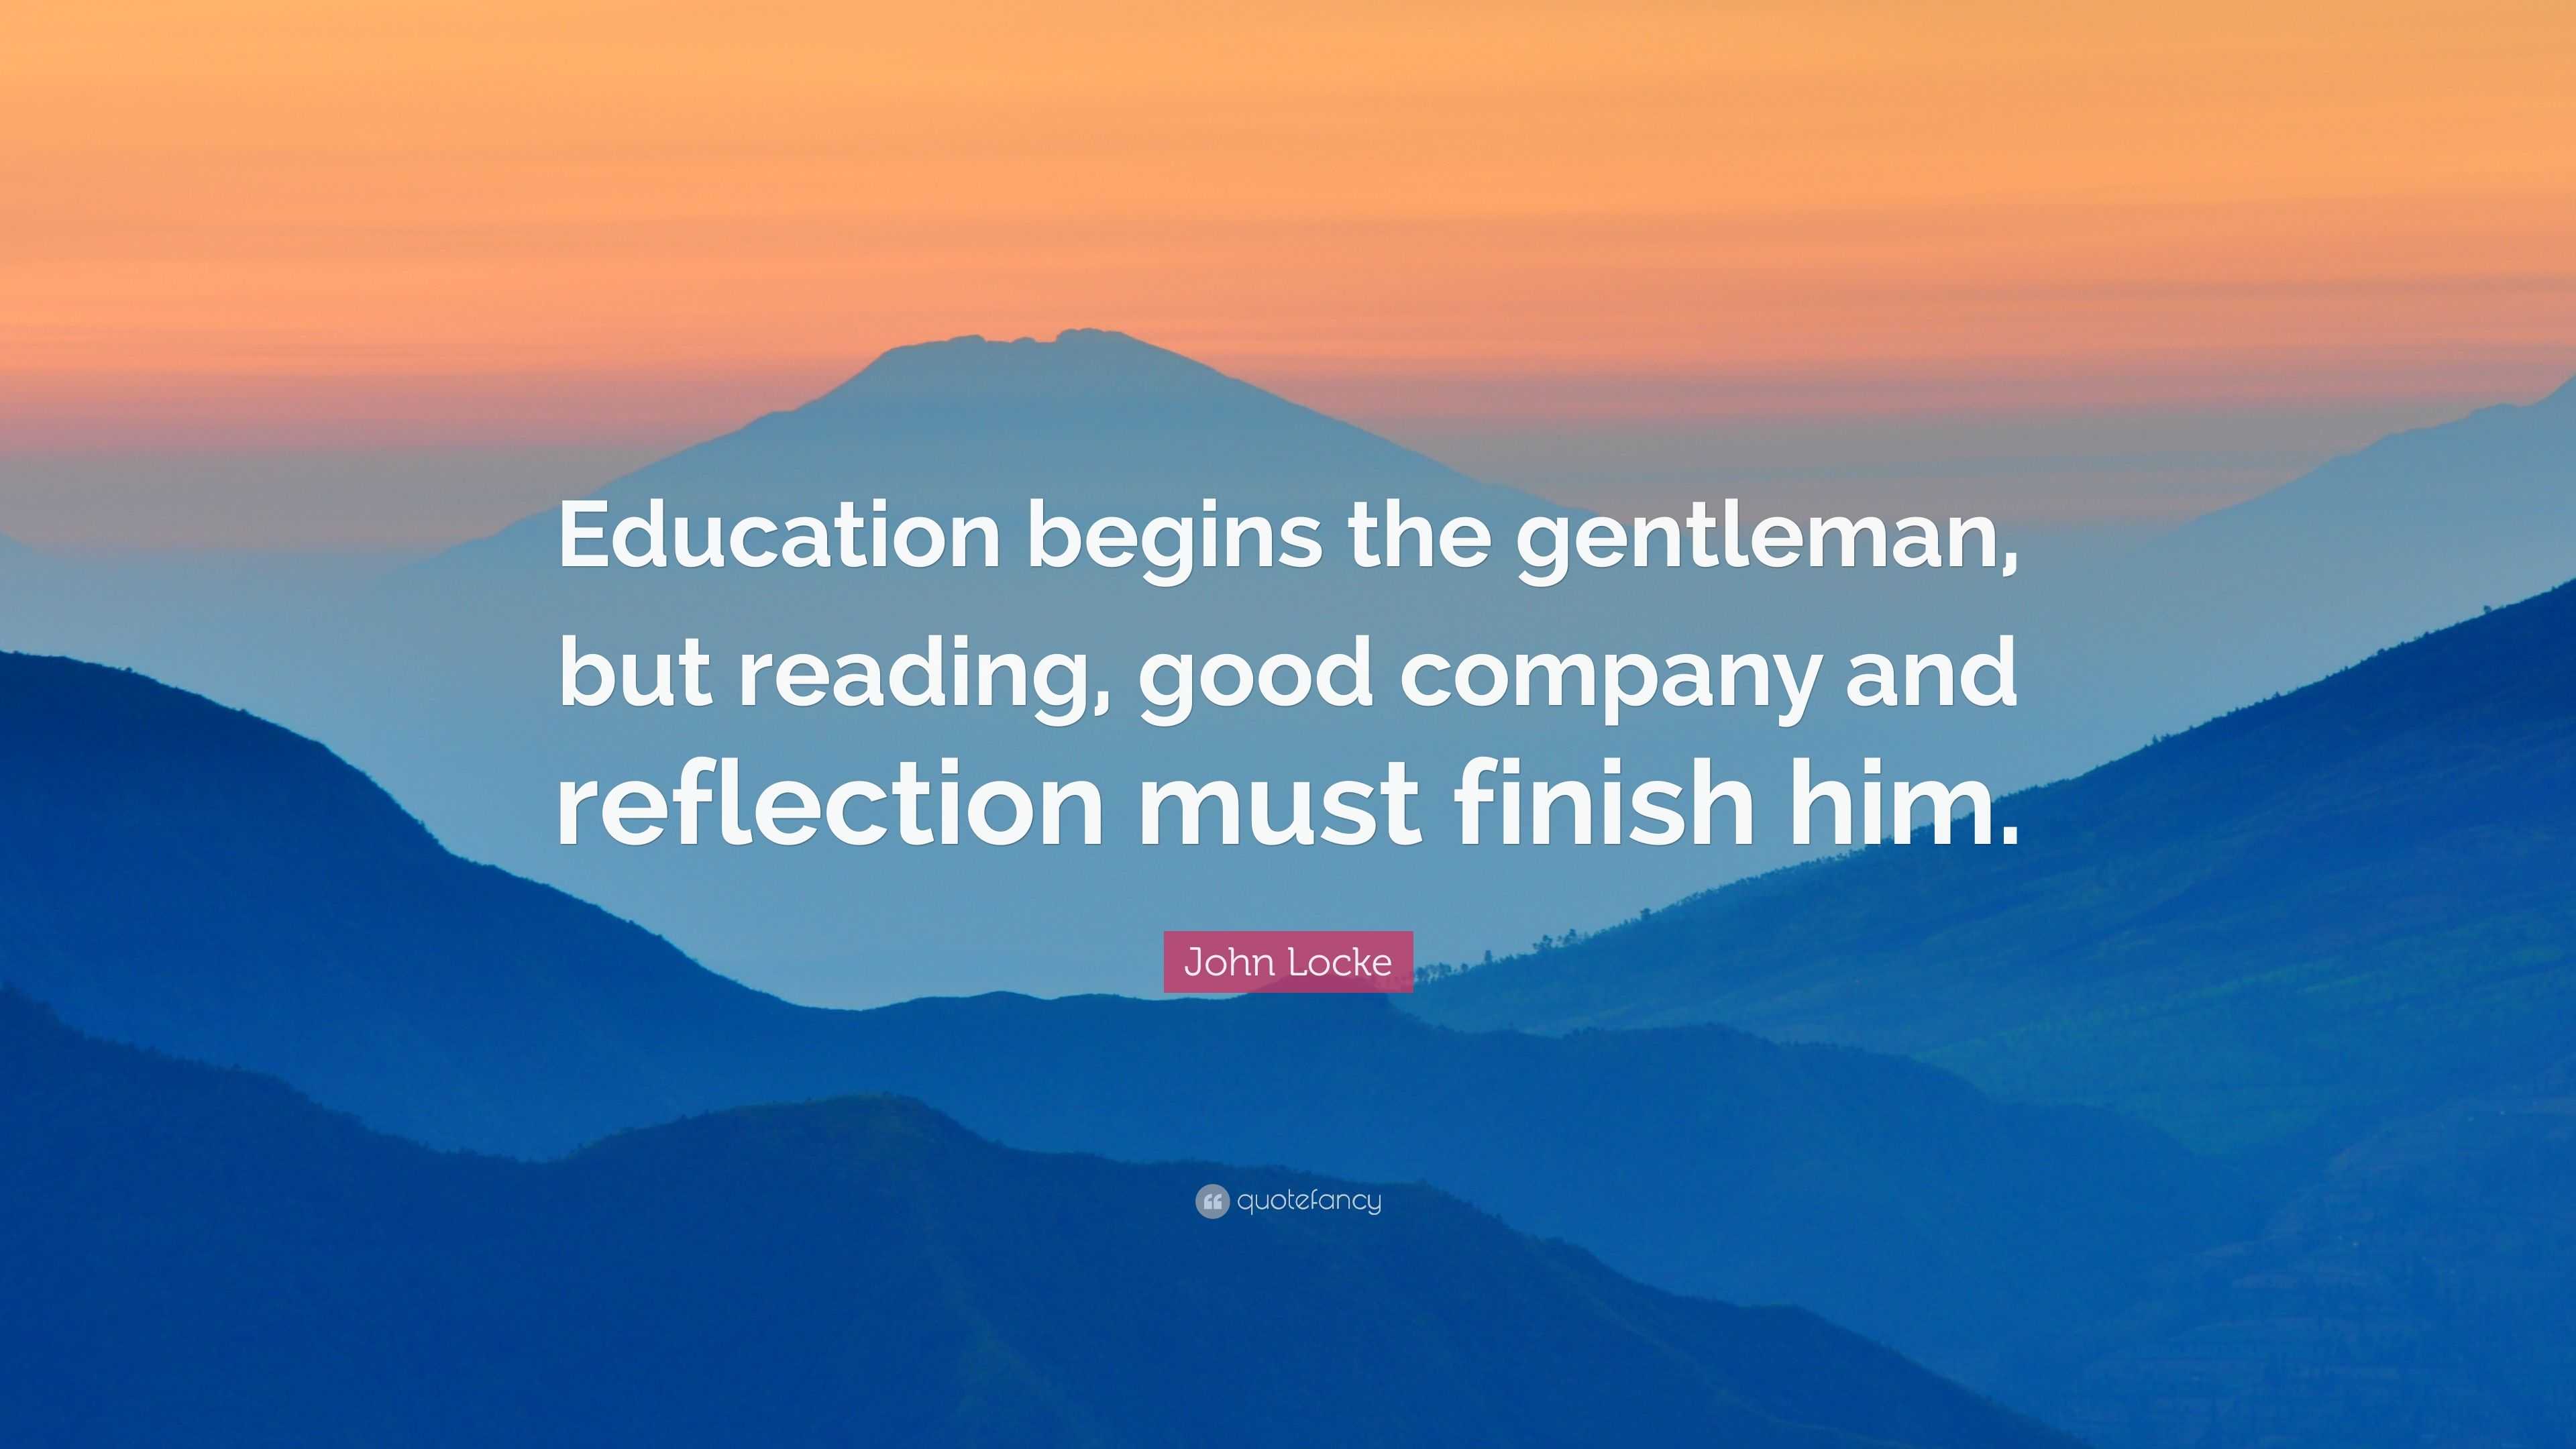 John Locke Quote “Education begins the gentleman, but